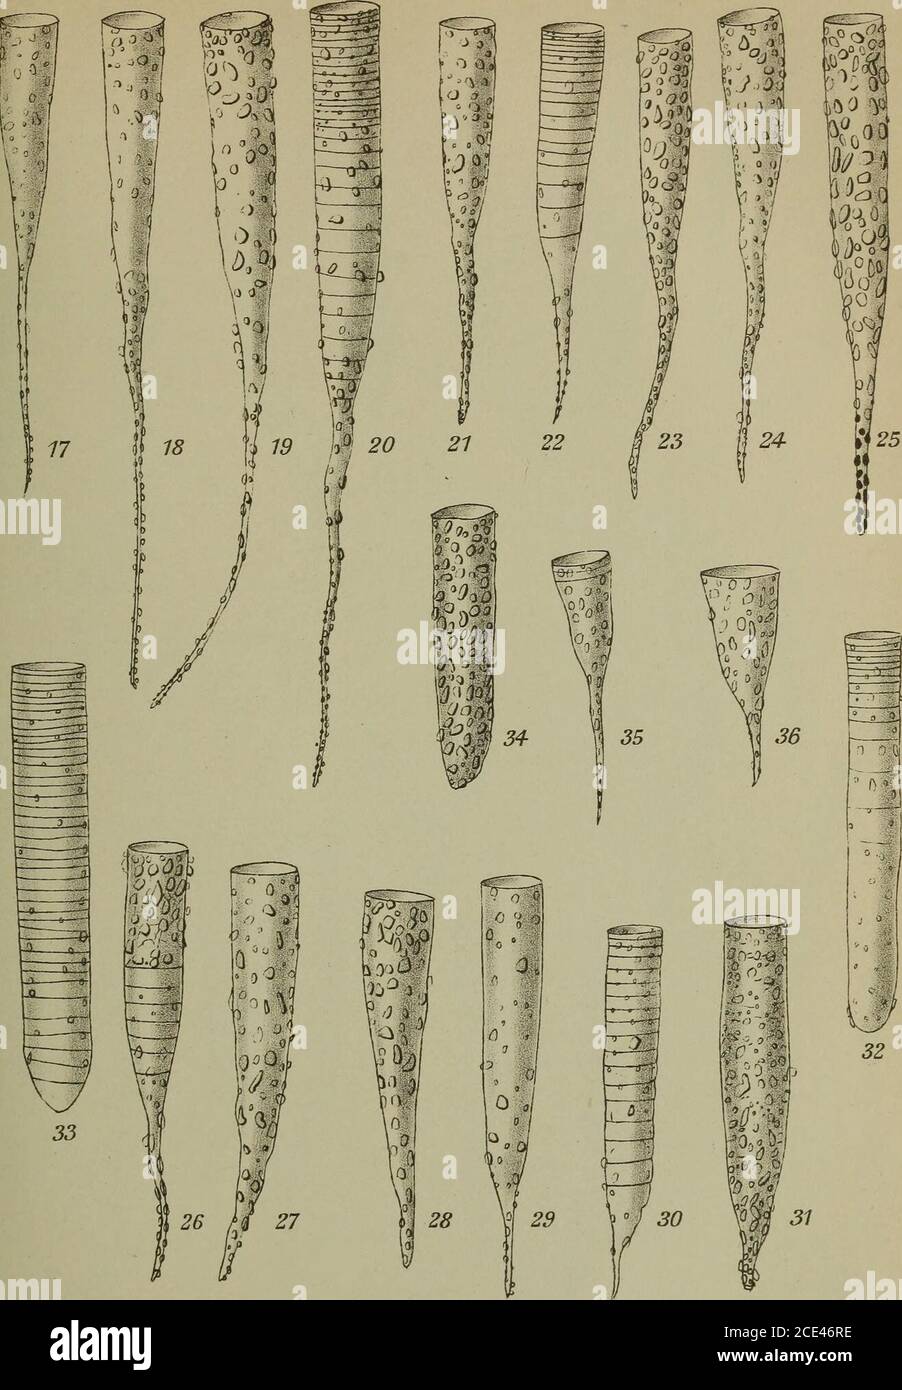 . Sitzungsberichte . Fig. 1—7 Dictyocysta elegans. Ehrenberg„ 8 Tintinnopsis beroidea Stein var. b. Brdt..9—16 „ compressa (v. Daday) Sitzimgslieric^ LaaclaaailR,H.: Adriaiische TiittiTmodeeii. Taf.H.. Fig. 17—32, 34 Tintfanopsis radix Imhof 33 „ helix clap. u. Lachm. m 35, 36 » davidoffii v. Daday. Sitzungsberichte d/kais.Alcad.d.Wiss, rciaüi. naturw. Klasso;lM.XXü.AM IU.1913. Laaclauaim,!!.: Asiatische Tmthmo&een. Taf.nr. ar —^^i - ° o ^I5j h-: —5-Q ?&gt; ^j - ^ «d ^- -A 0 0 0 q ^^ Wi- ^ 4 J K-^-J h- ; &lt;W 6 -J f*- ? L  J±M £ 0 Stock Photo